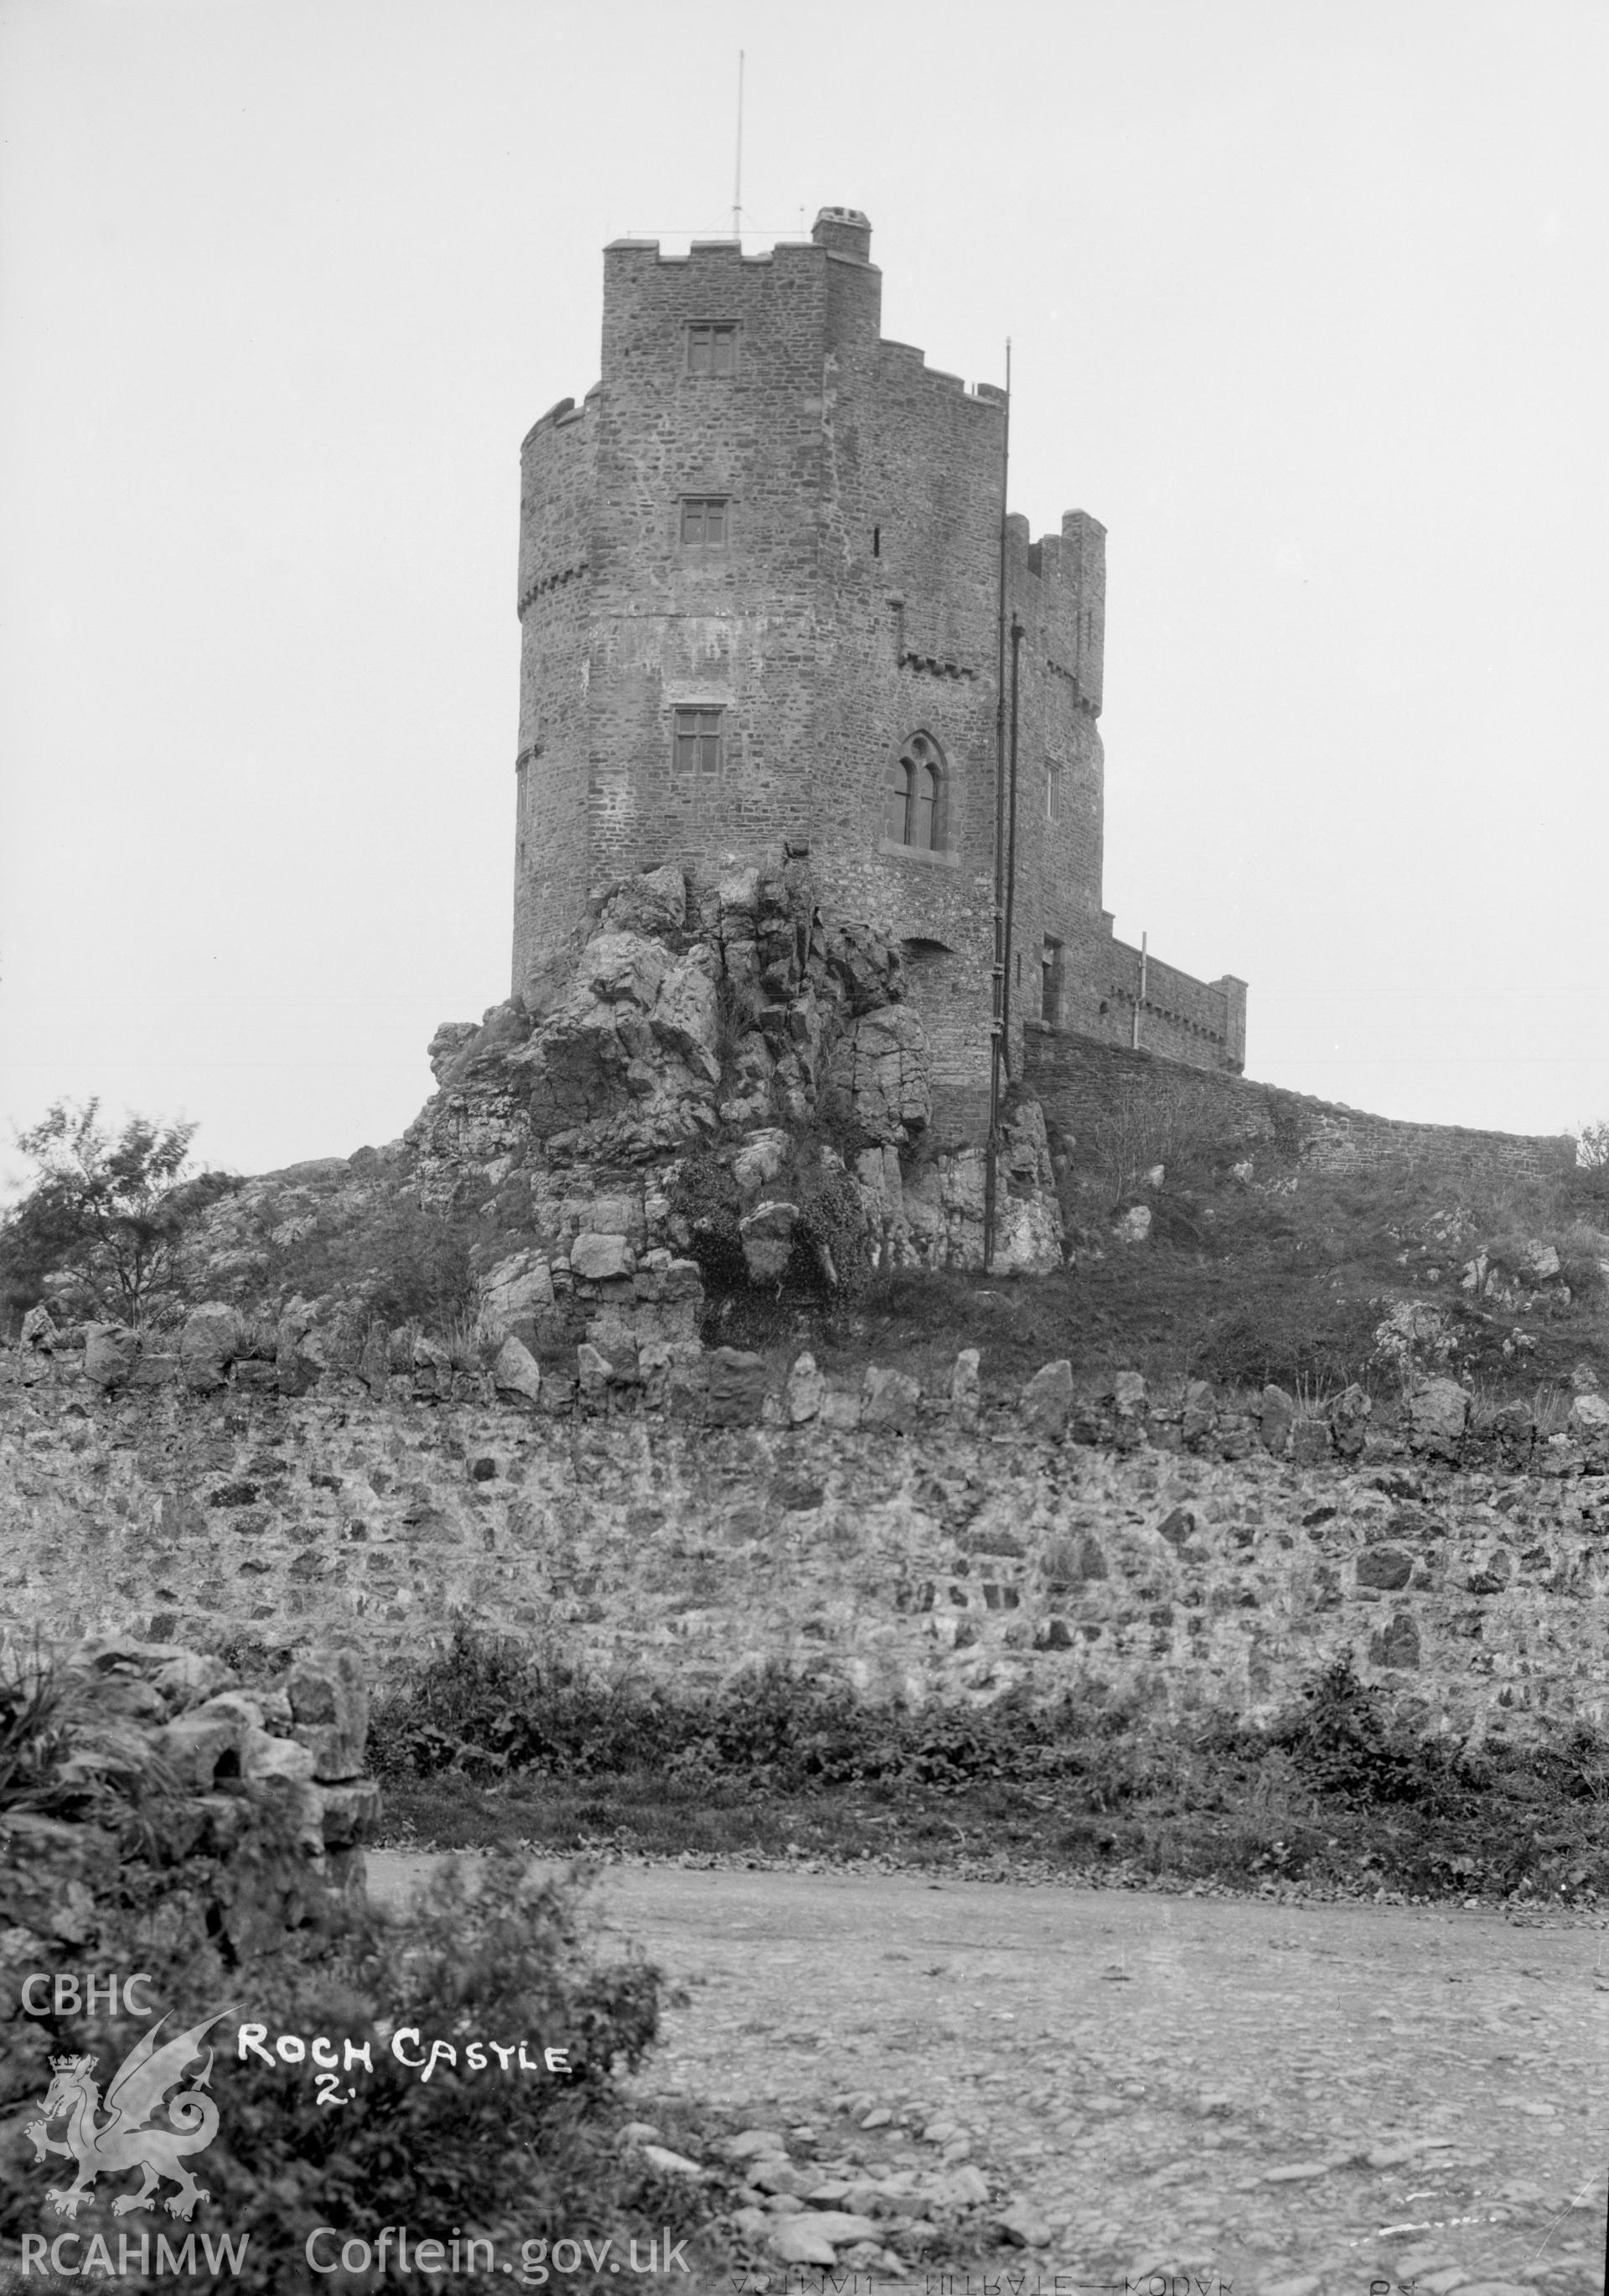 View of Roch Castle, Pembs, taken by W A Call, 1930.